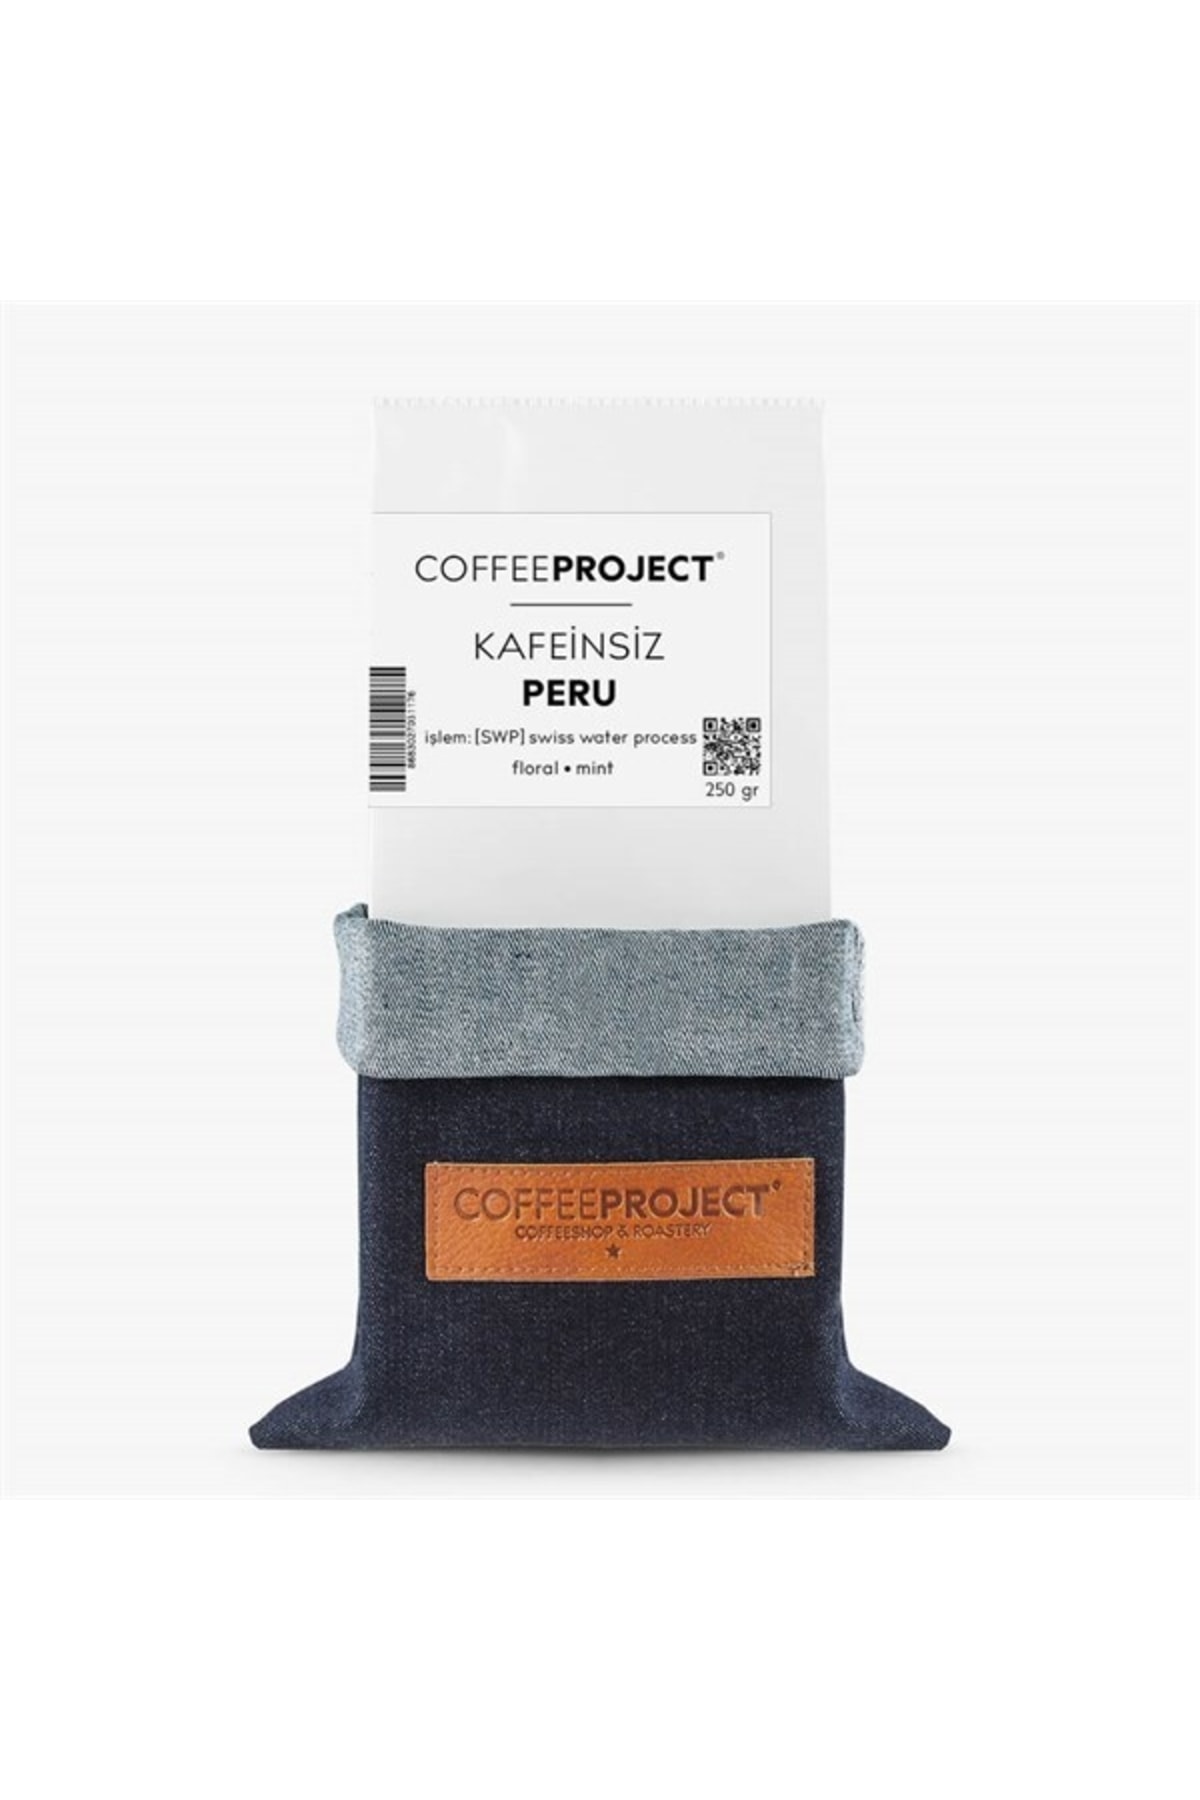 Coffee Project Peru - Kafeinsiz Kahve [Decaf]